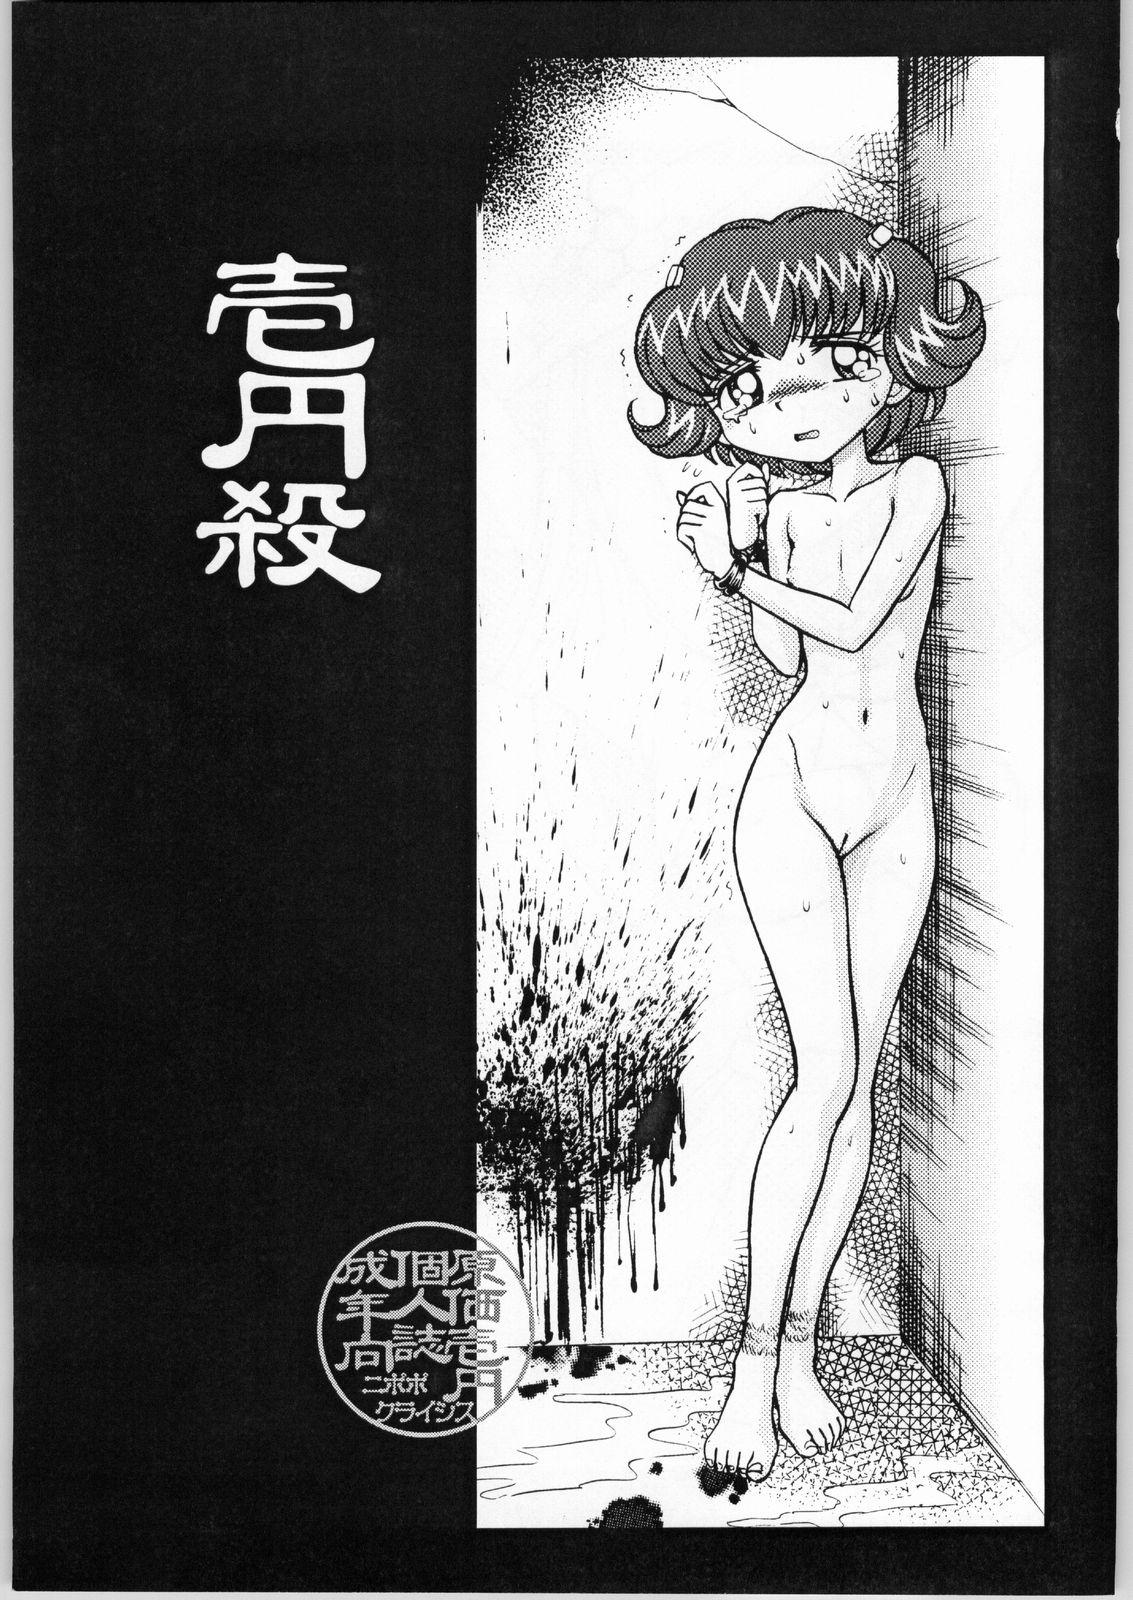 X Ichien Satsu - Ojamajo doremi Tenchi muyo Martian successor nadesico Turn a gundam Hand maid may Medabots Hamtaro Underwear - Page 2